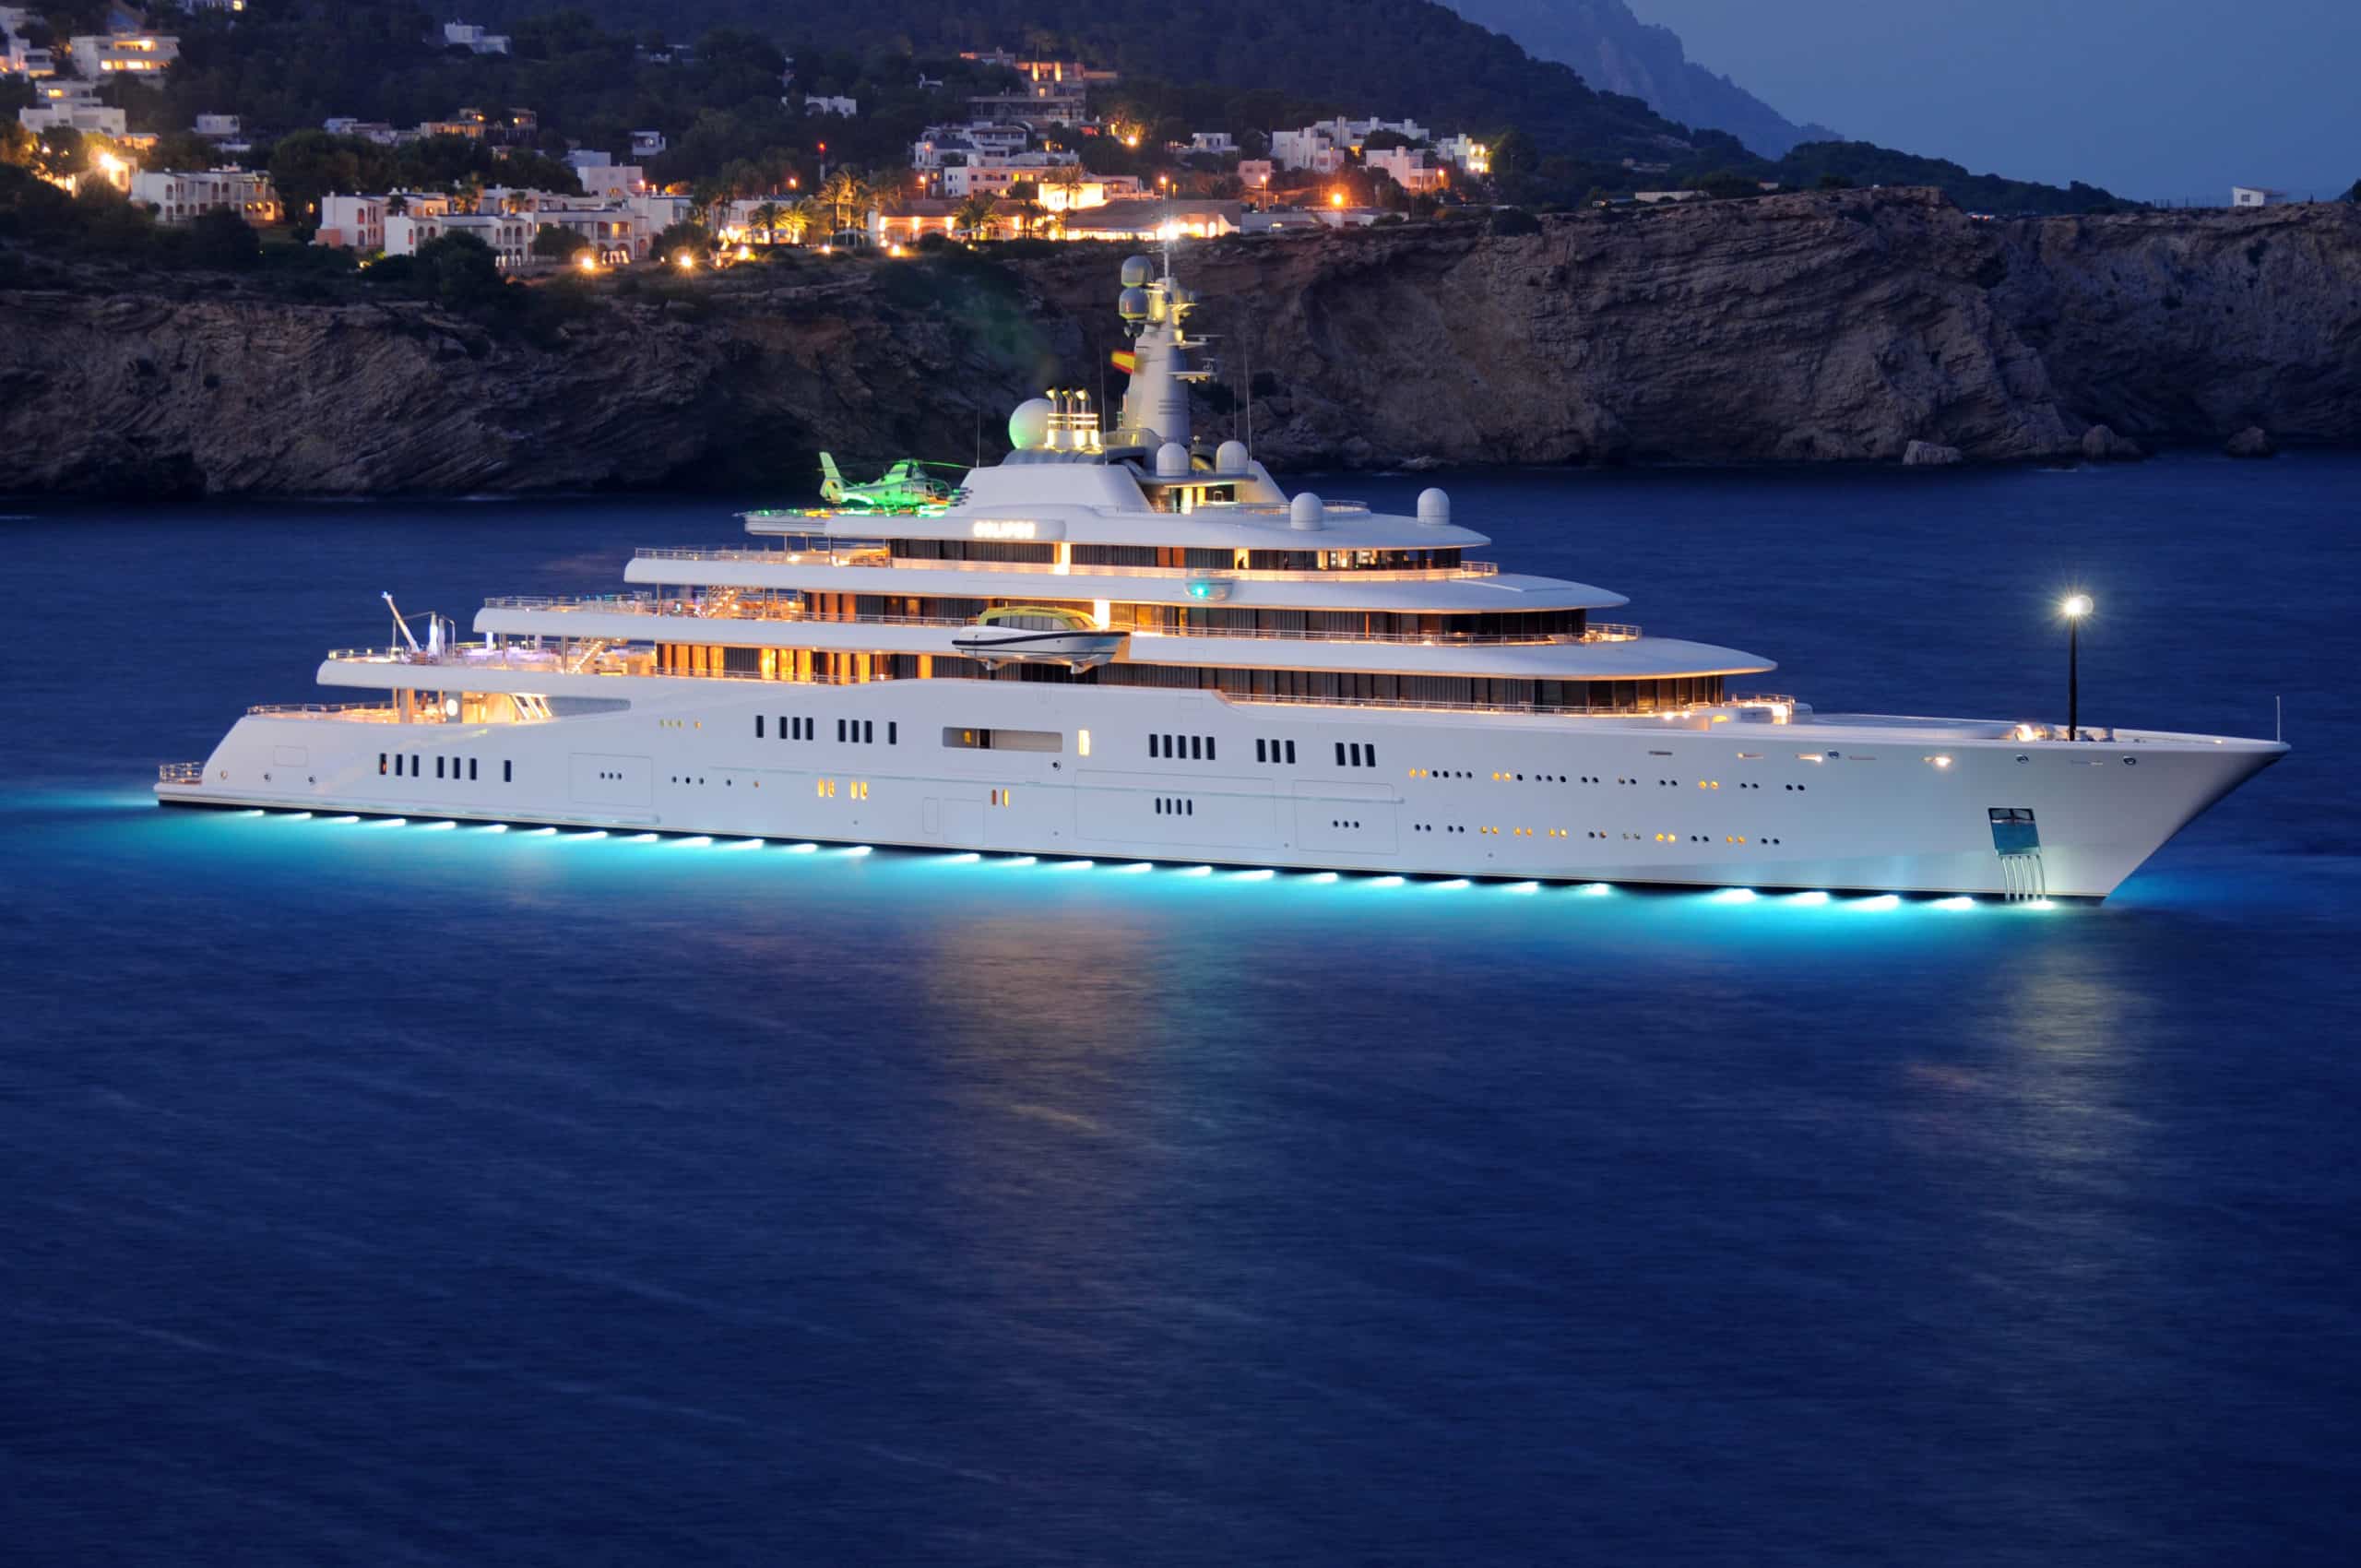 Private White Luxury Superyacht Eclipse Anchored Off The Beach. Ibiza